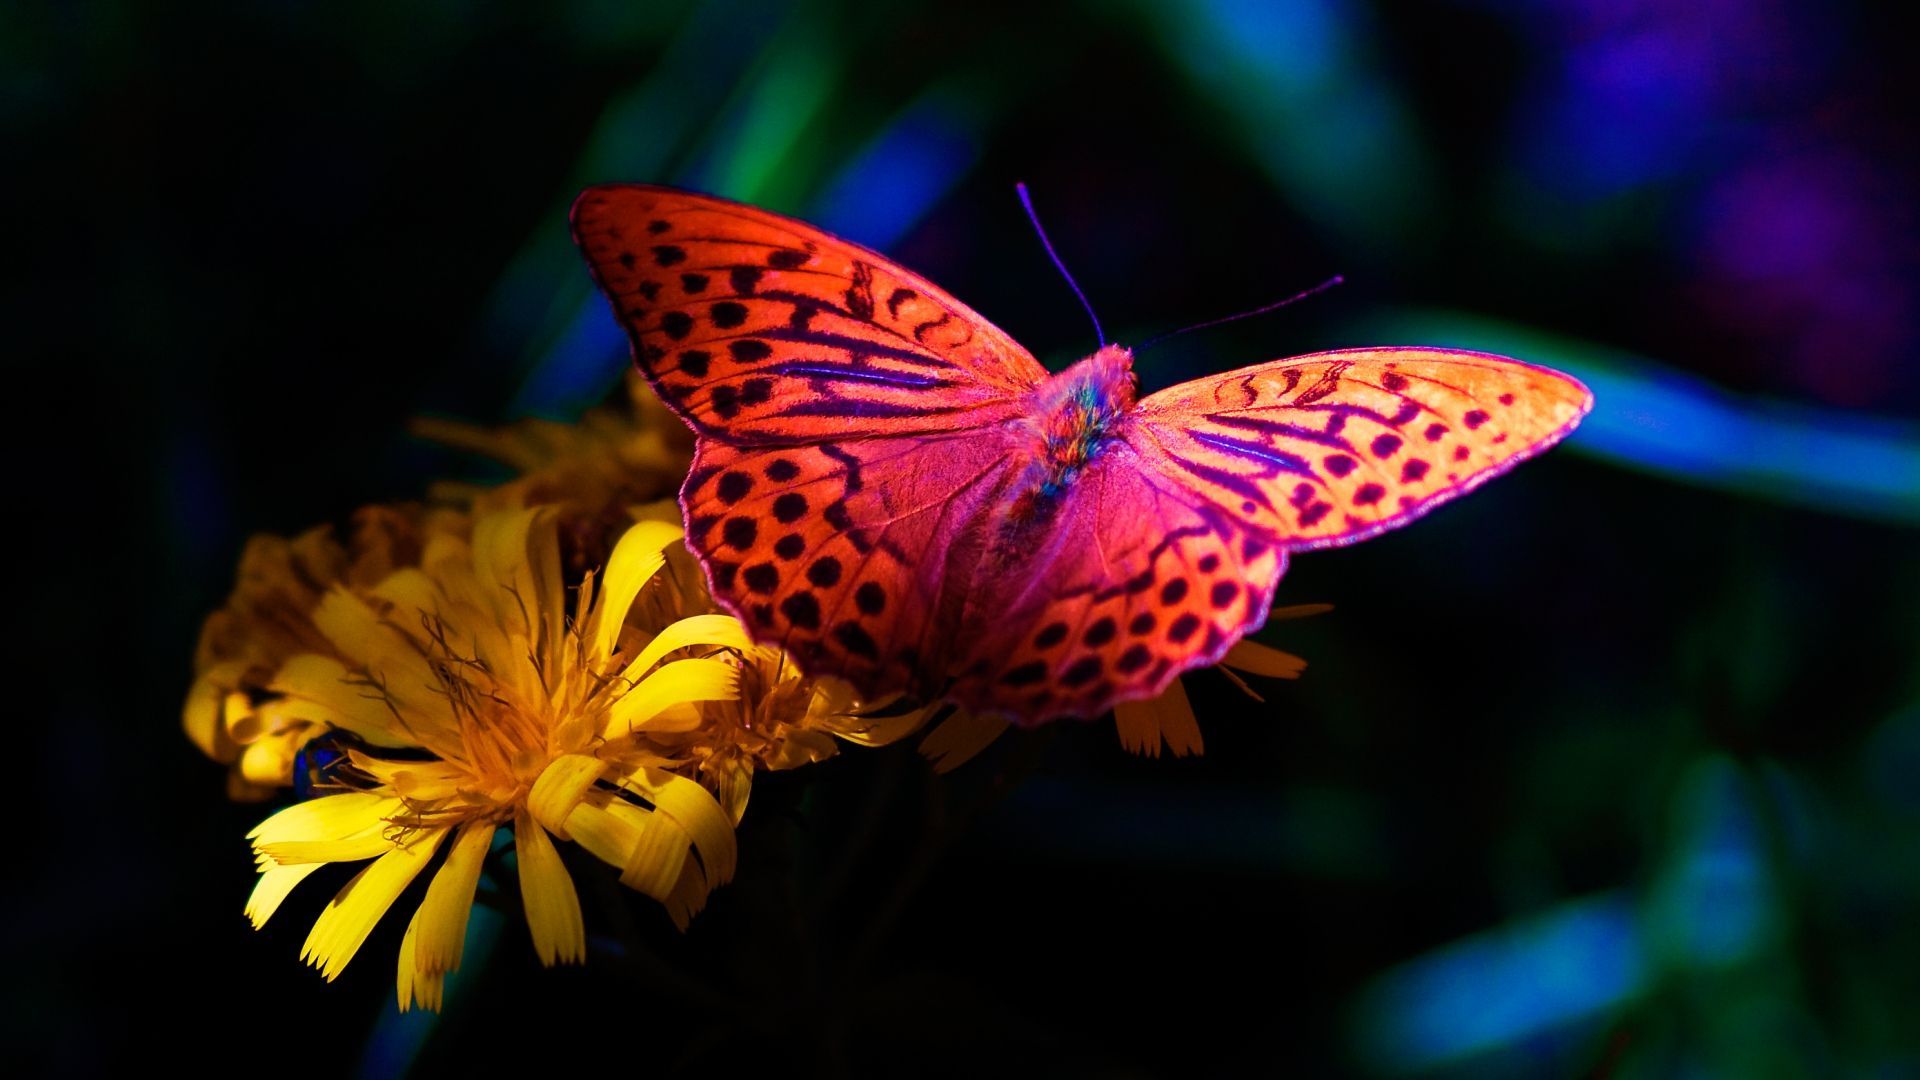 Download desktop wallpaper Flower and the butterfly